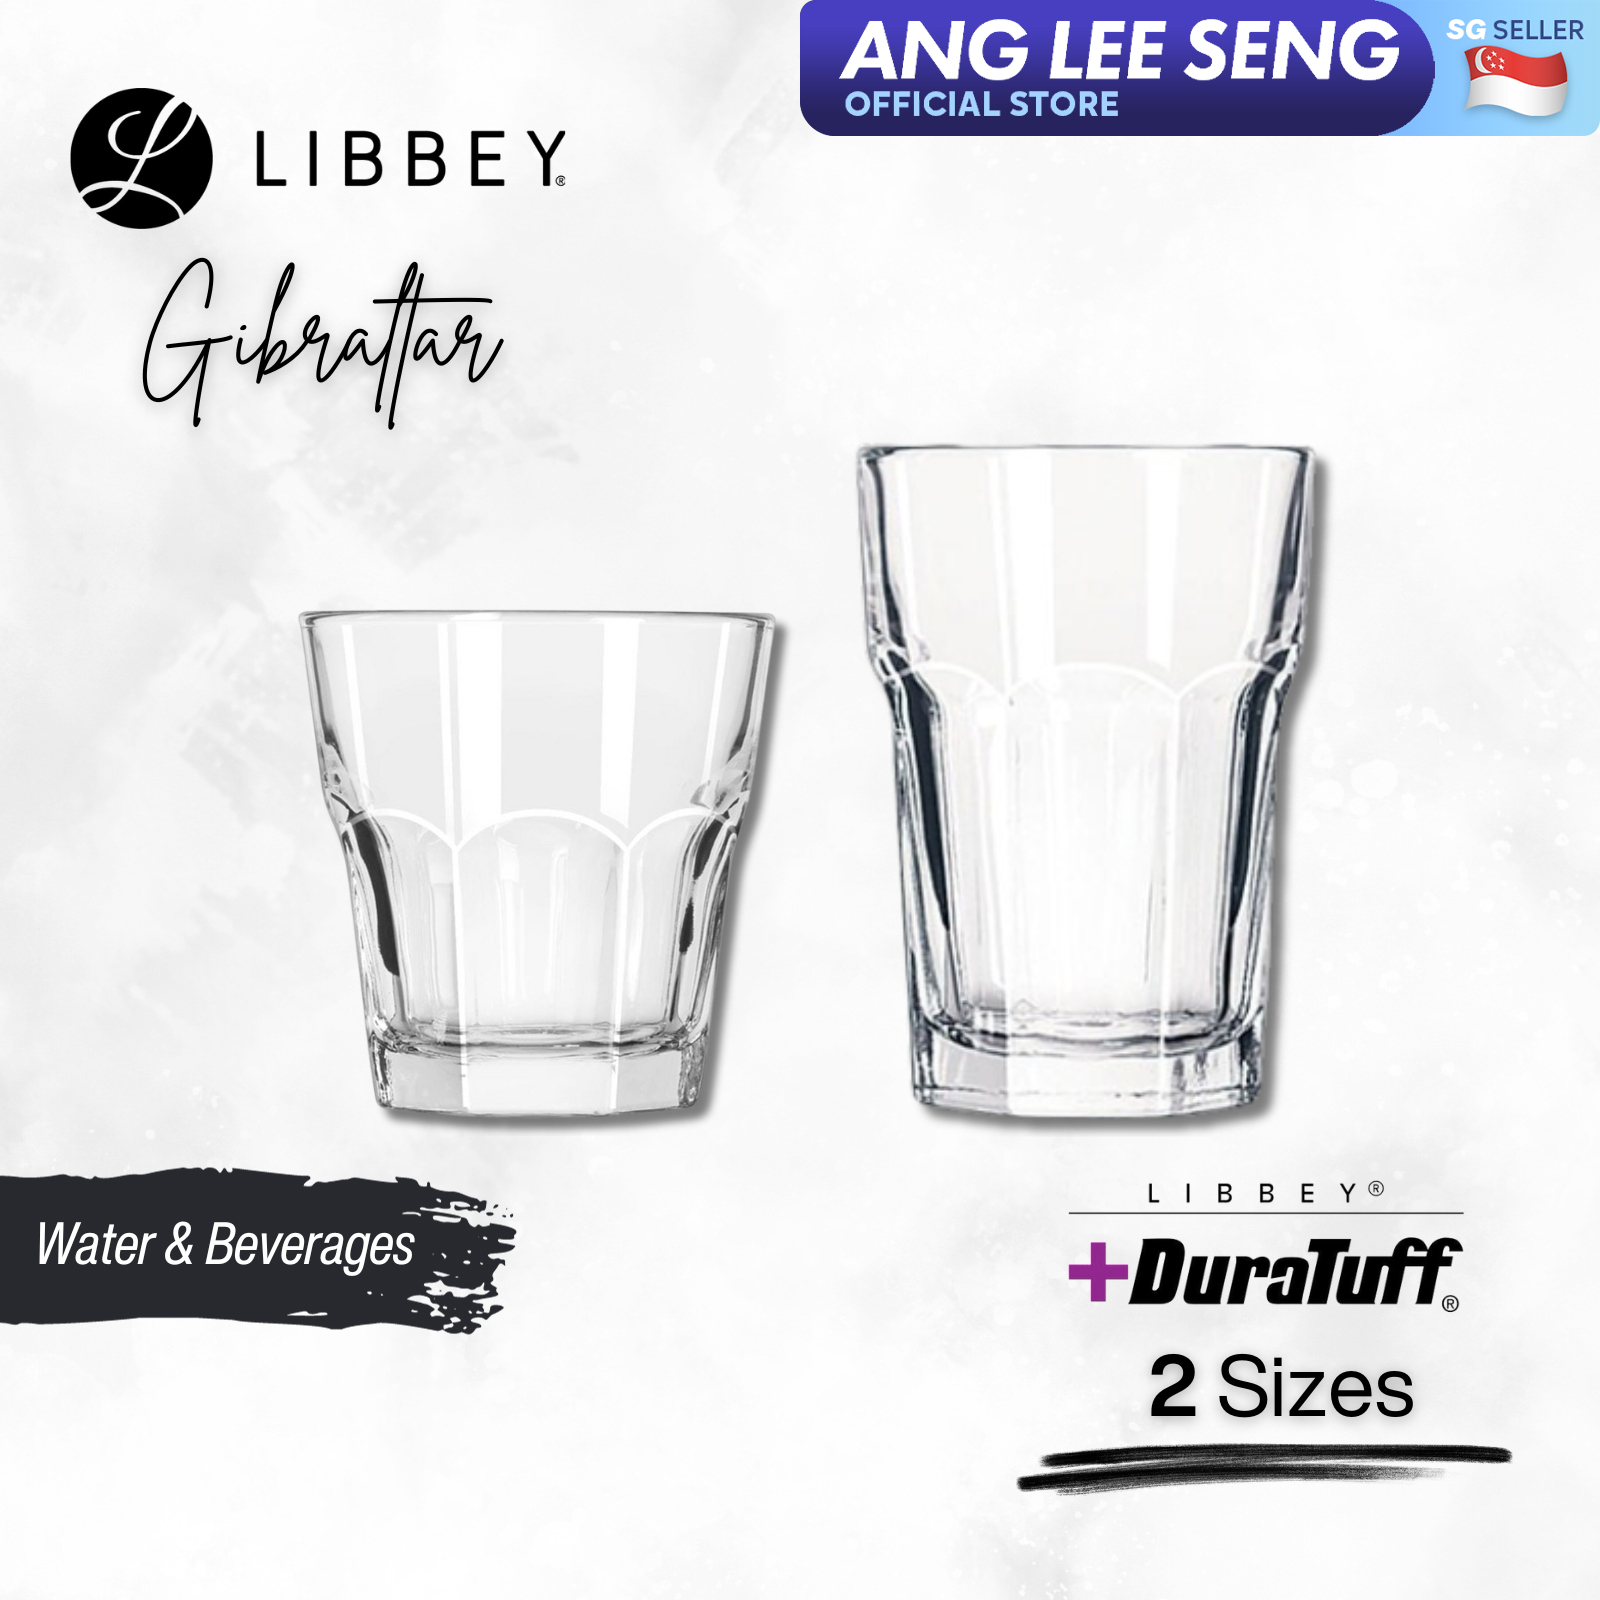 Libbey Gibraltar DuraTuff Glass Tumbler - Extra Tough Shatter & Heat Resistant - 2 Sizes, 2-pc Set